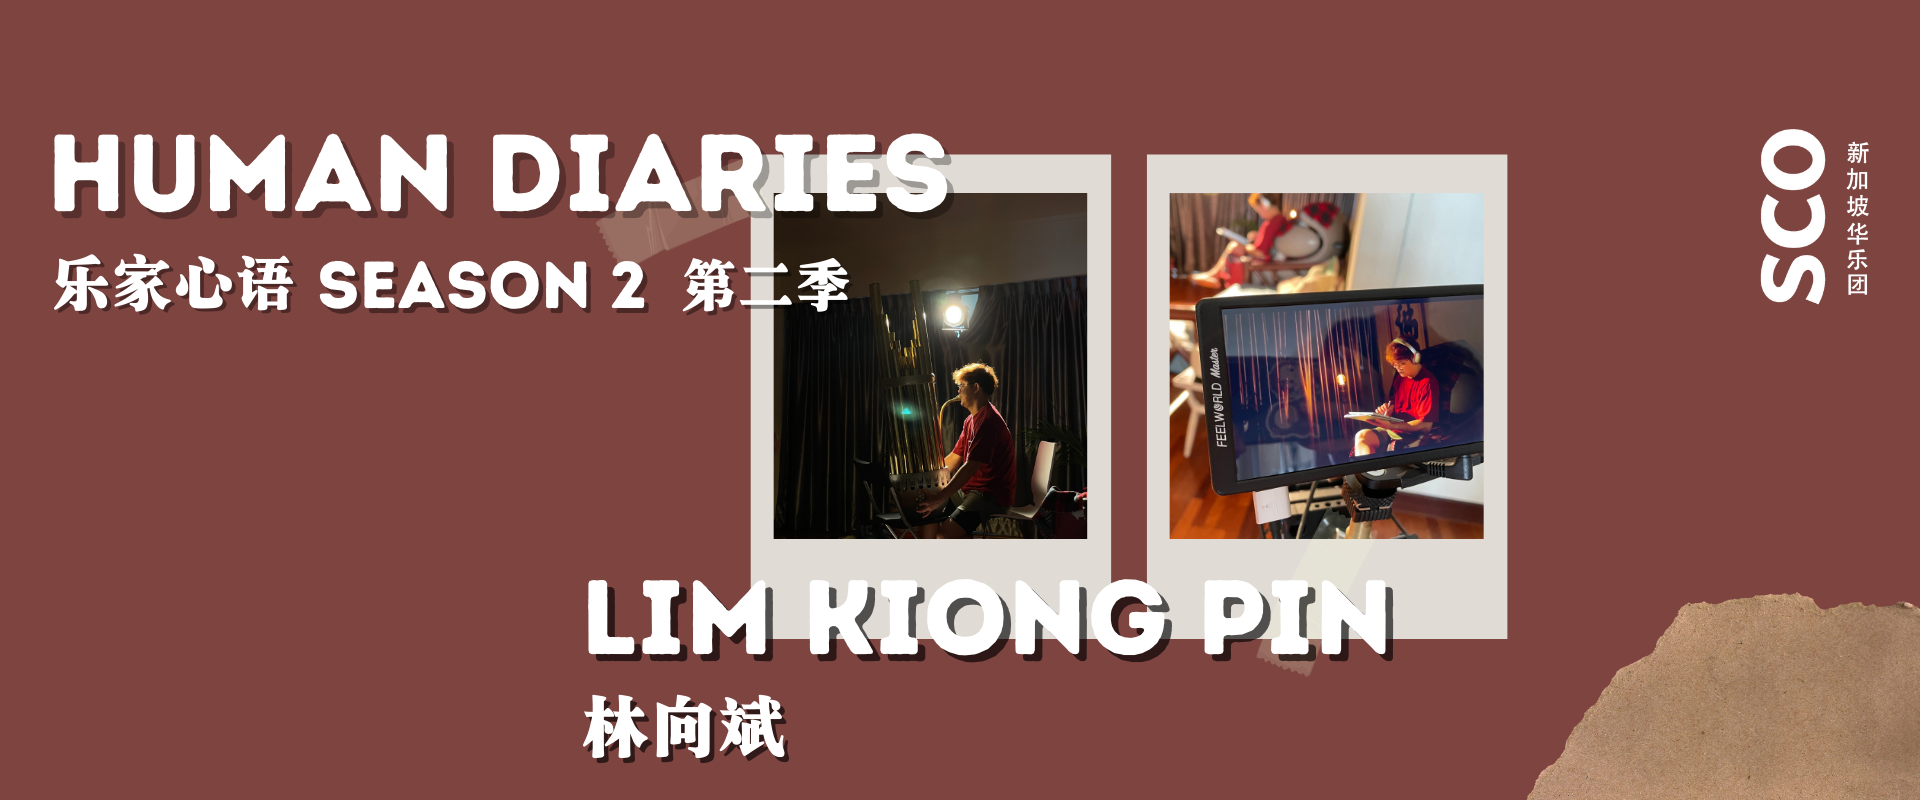 Lim_Kiong_Pin Blog